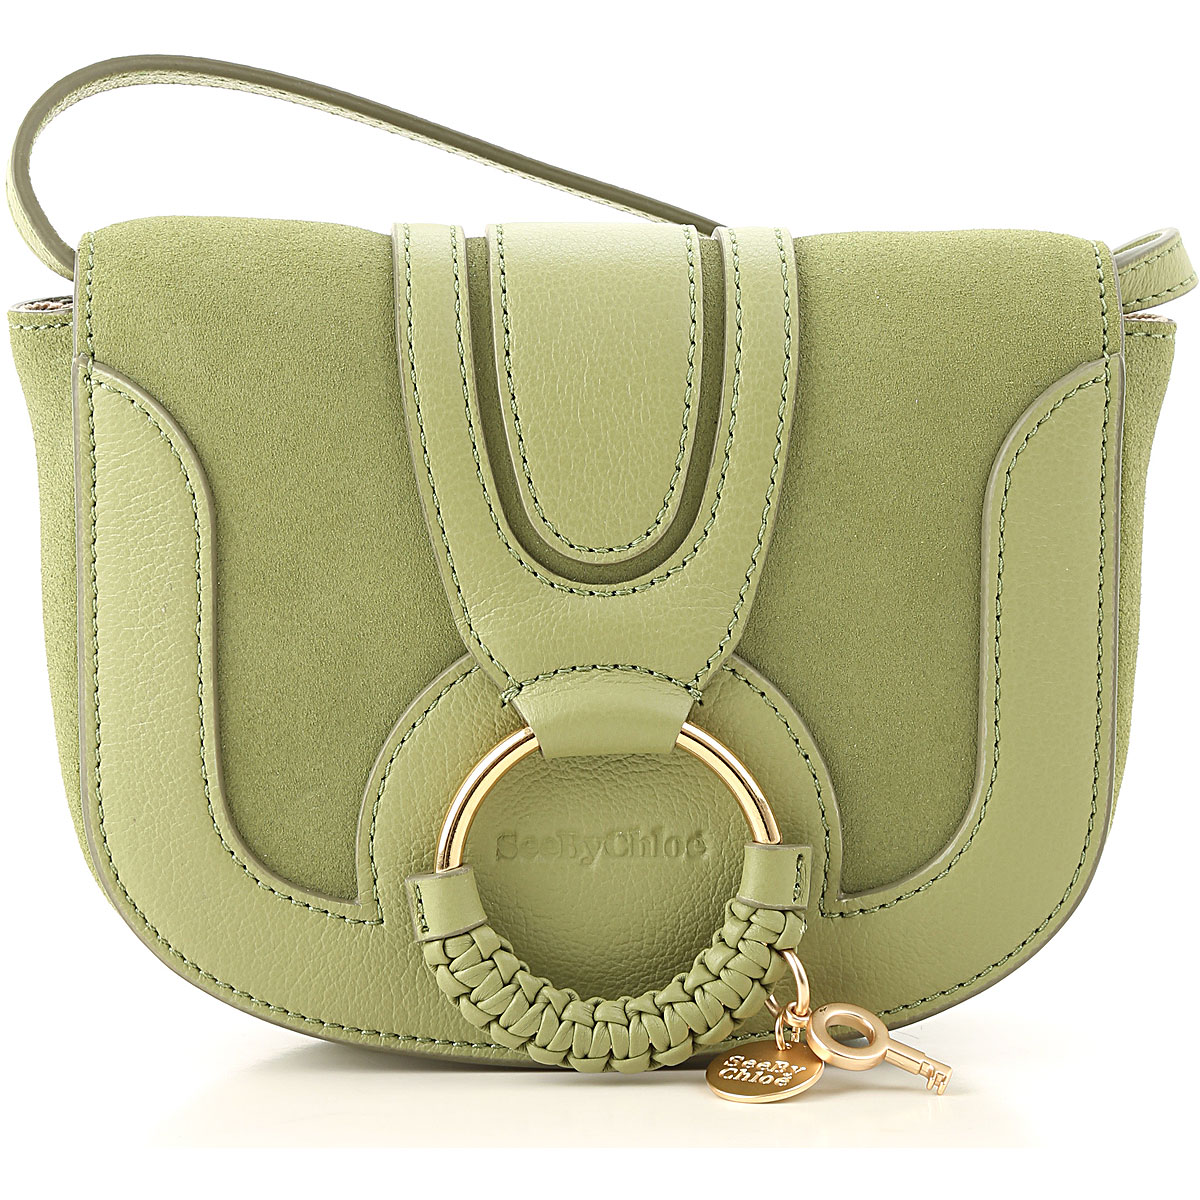 Handbags See By Chloe, Style code: chs18as90141737g-moss tone-